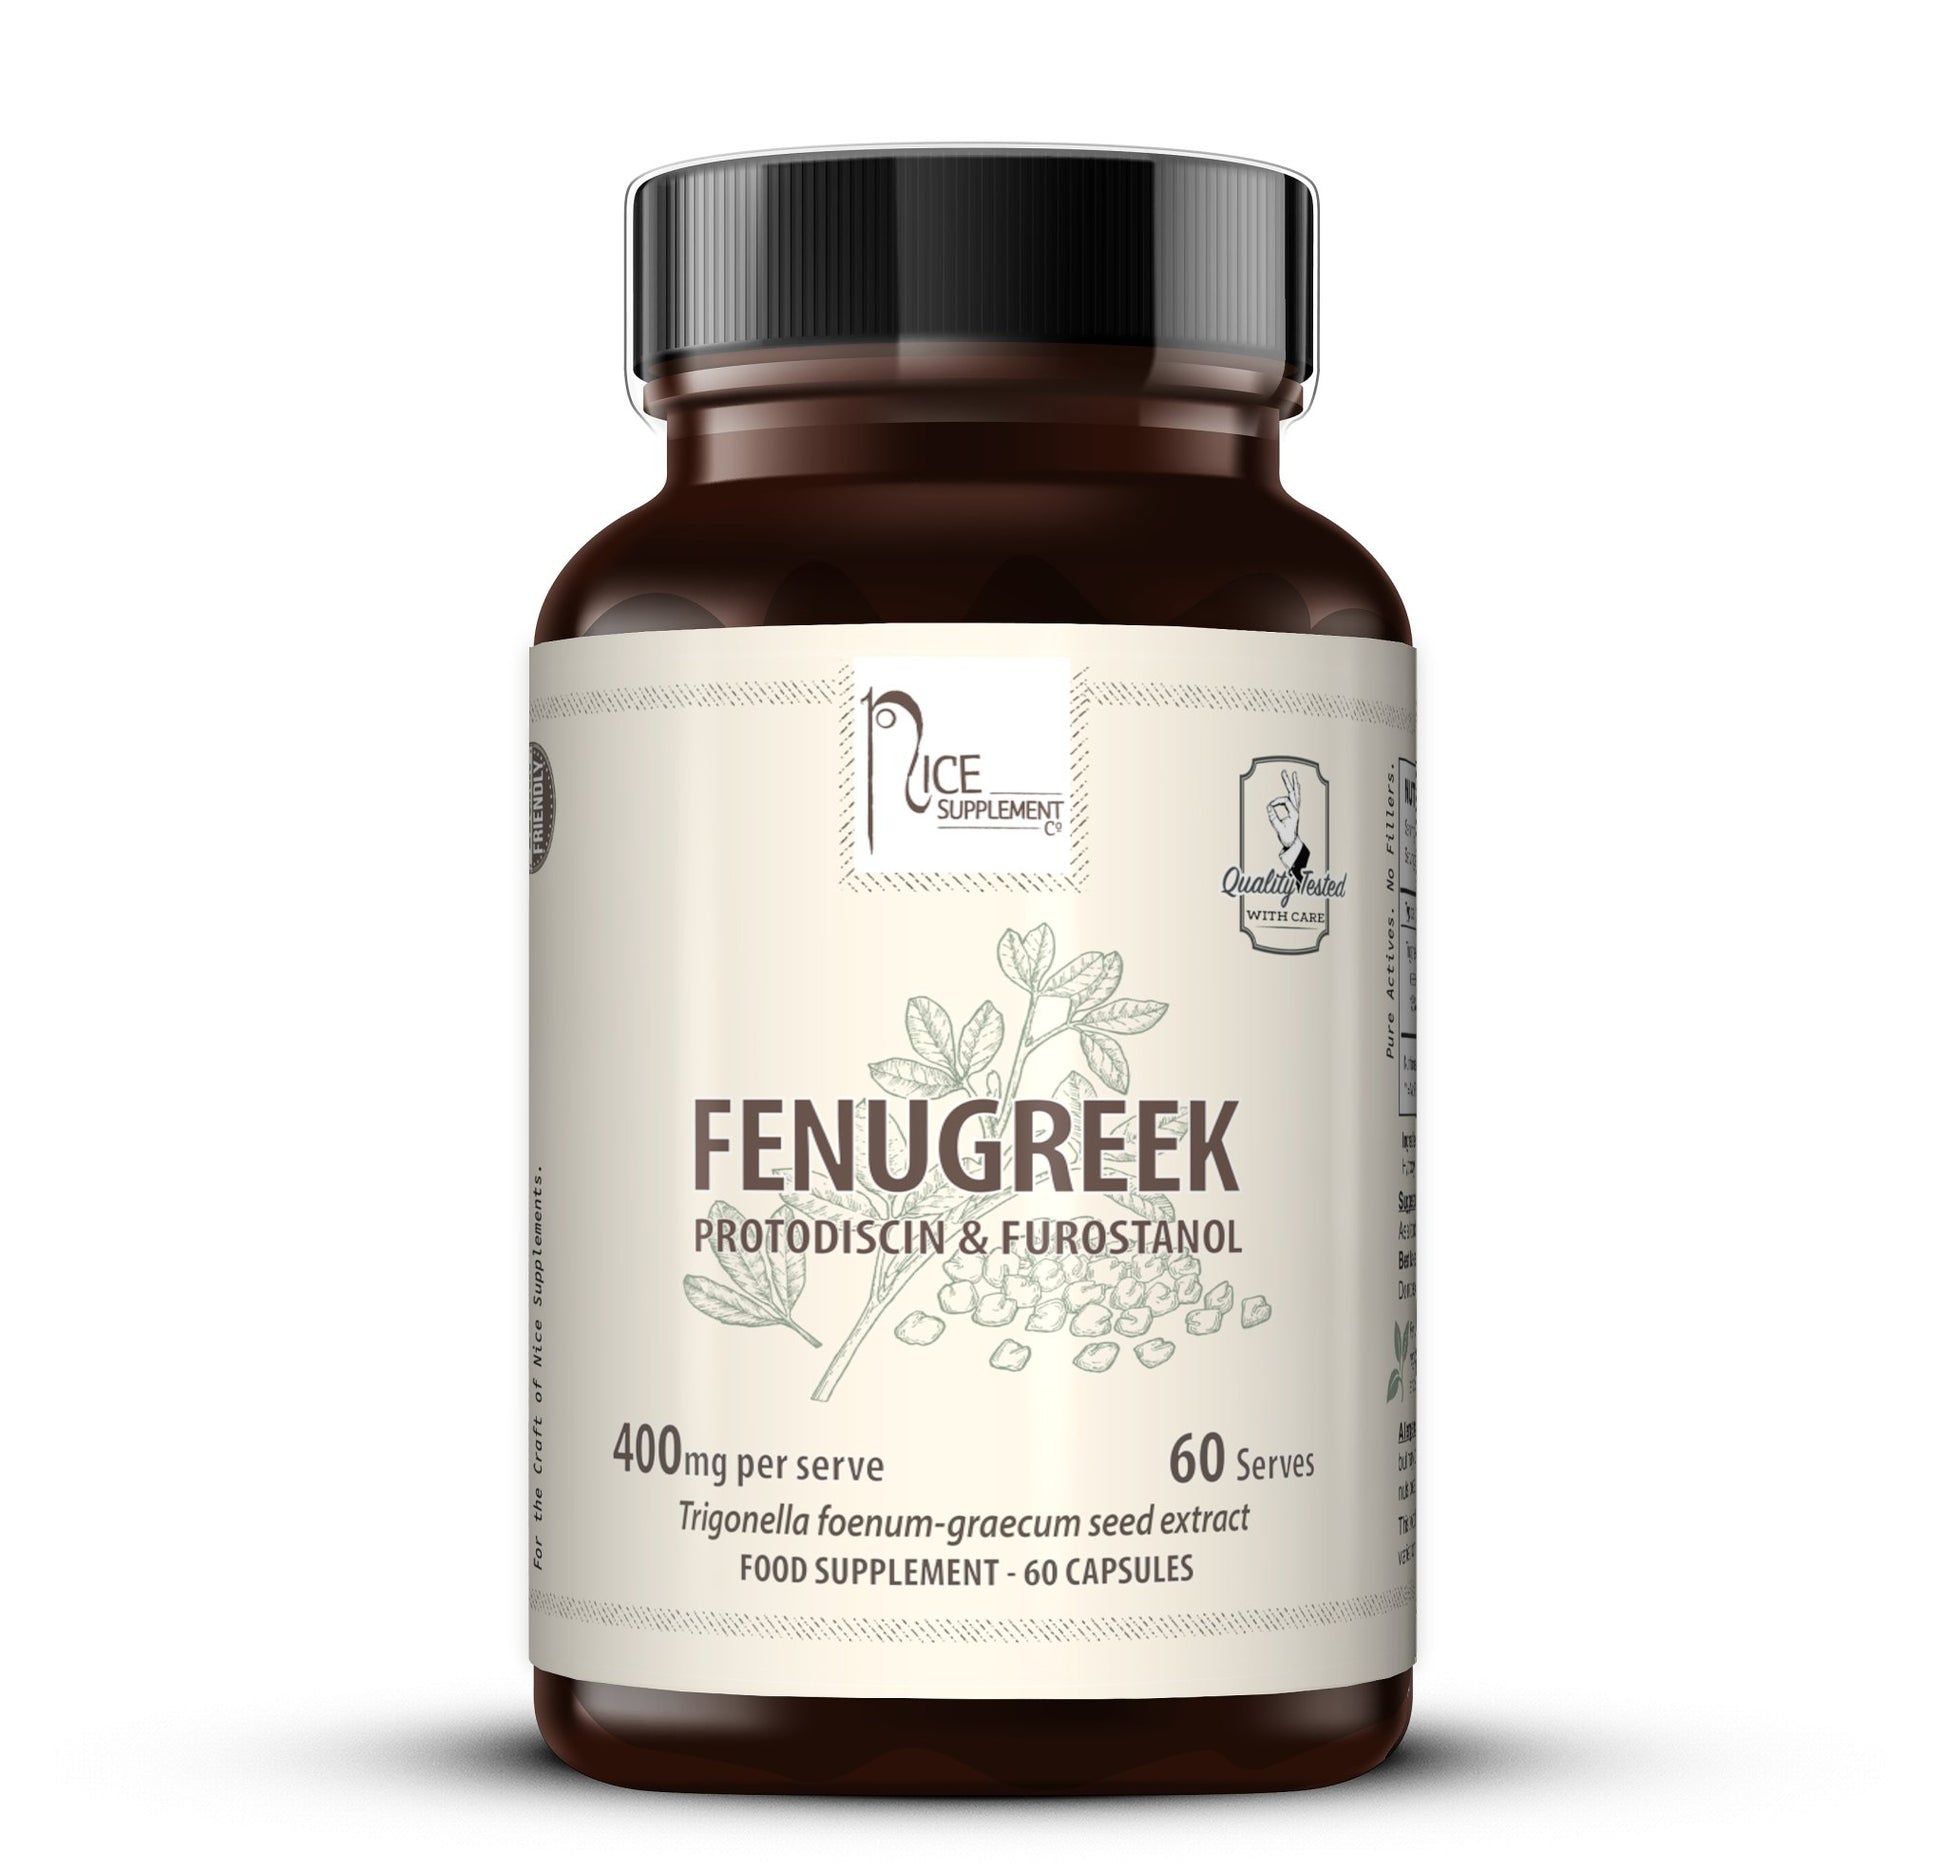 400mg Fenugreek 13% protodiscin, 70% furostanol for Testosterone -  Product Render - Nice Supplement Co.